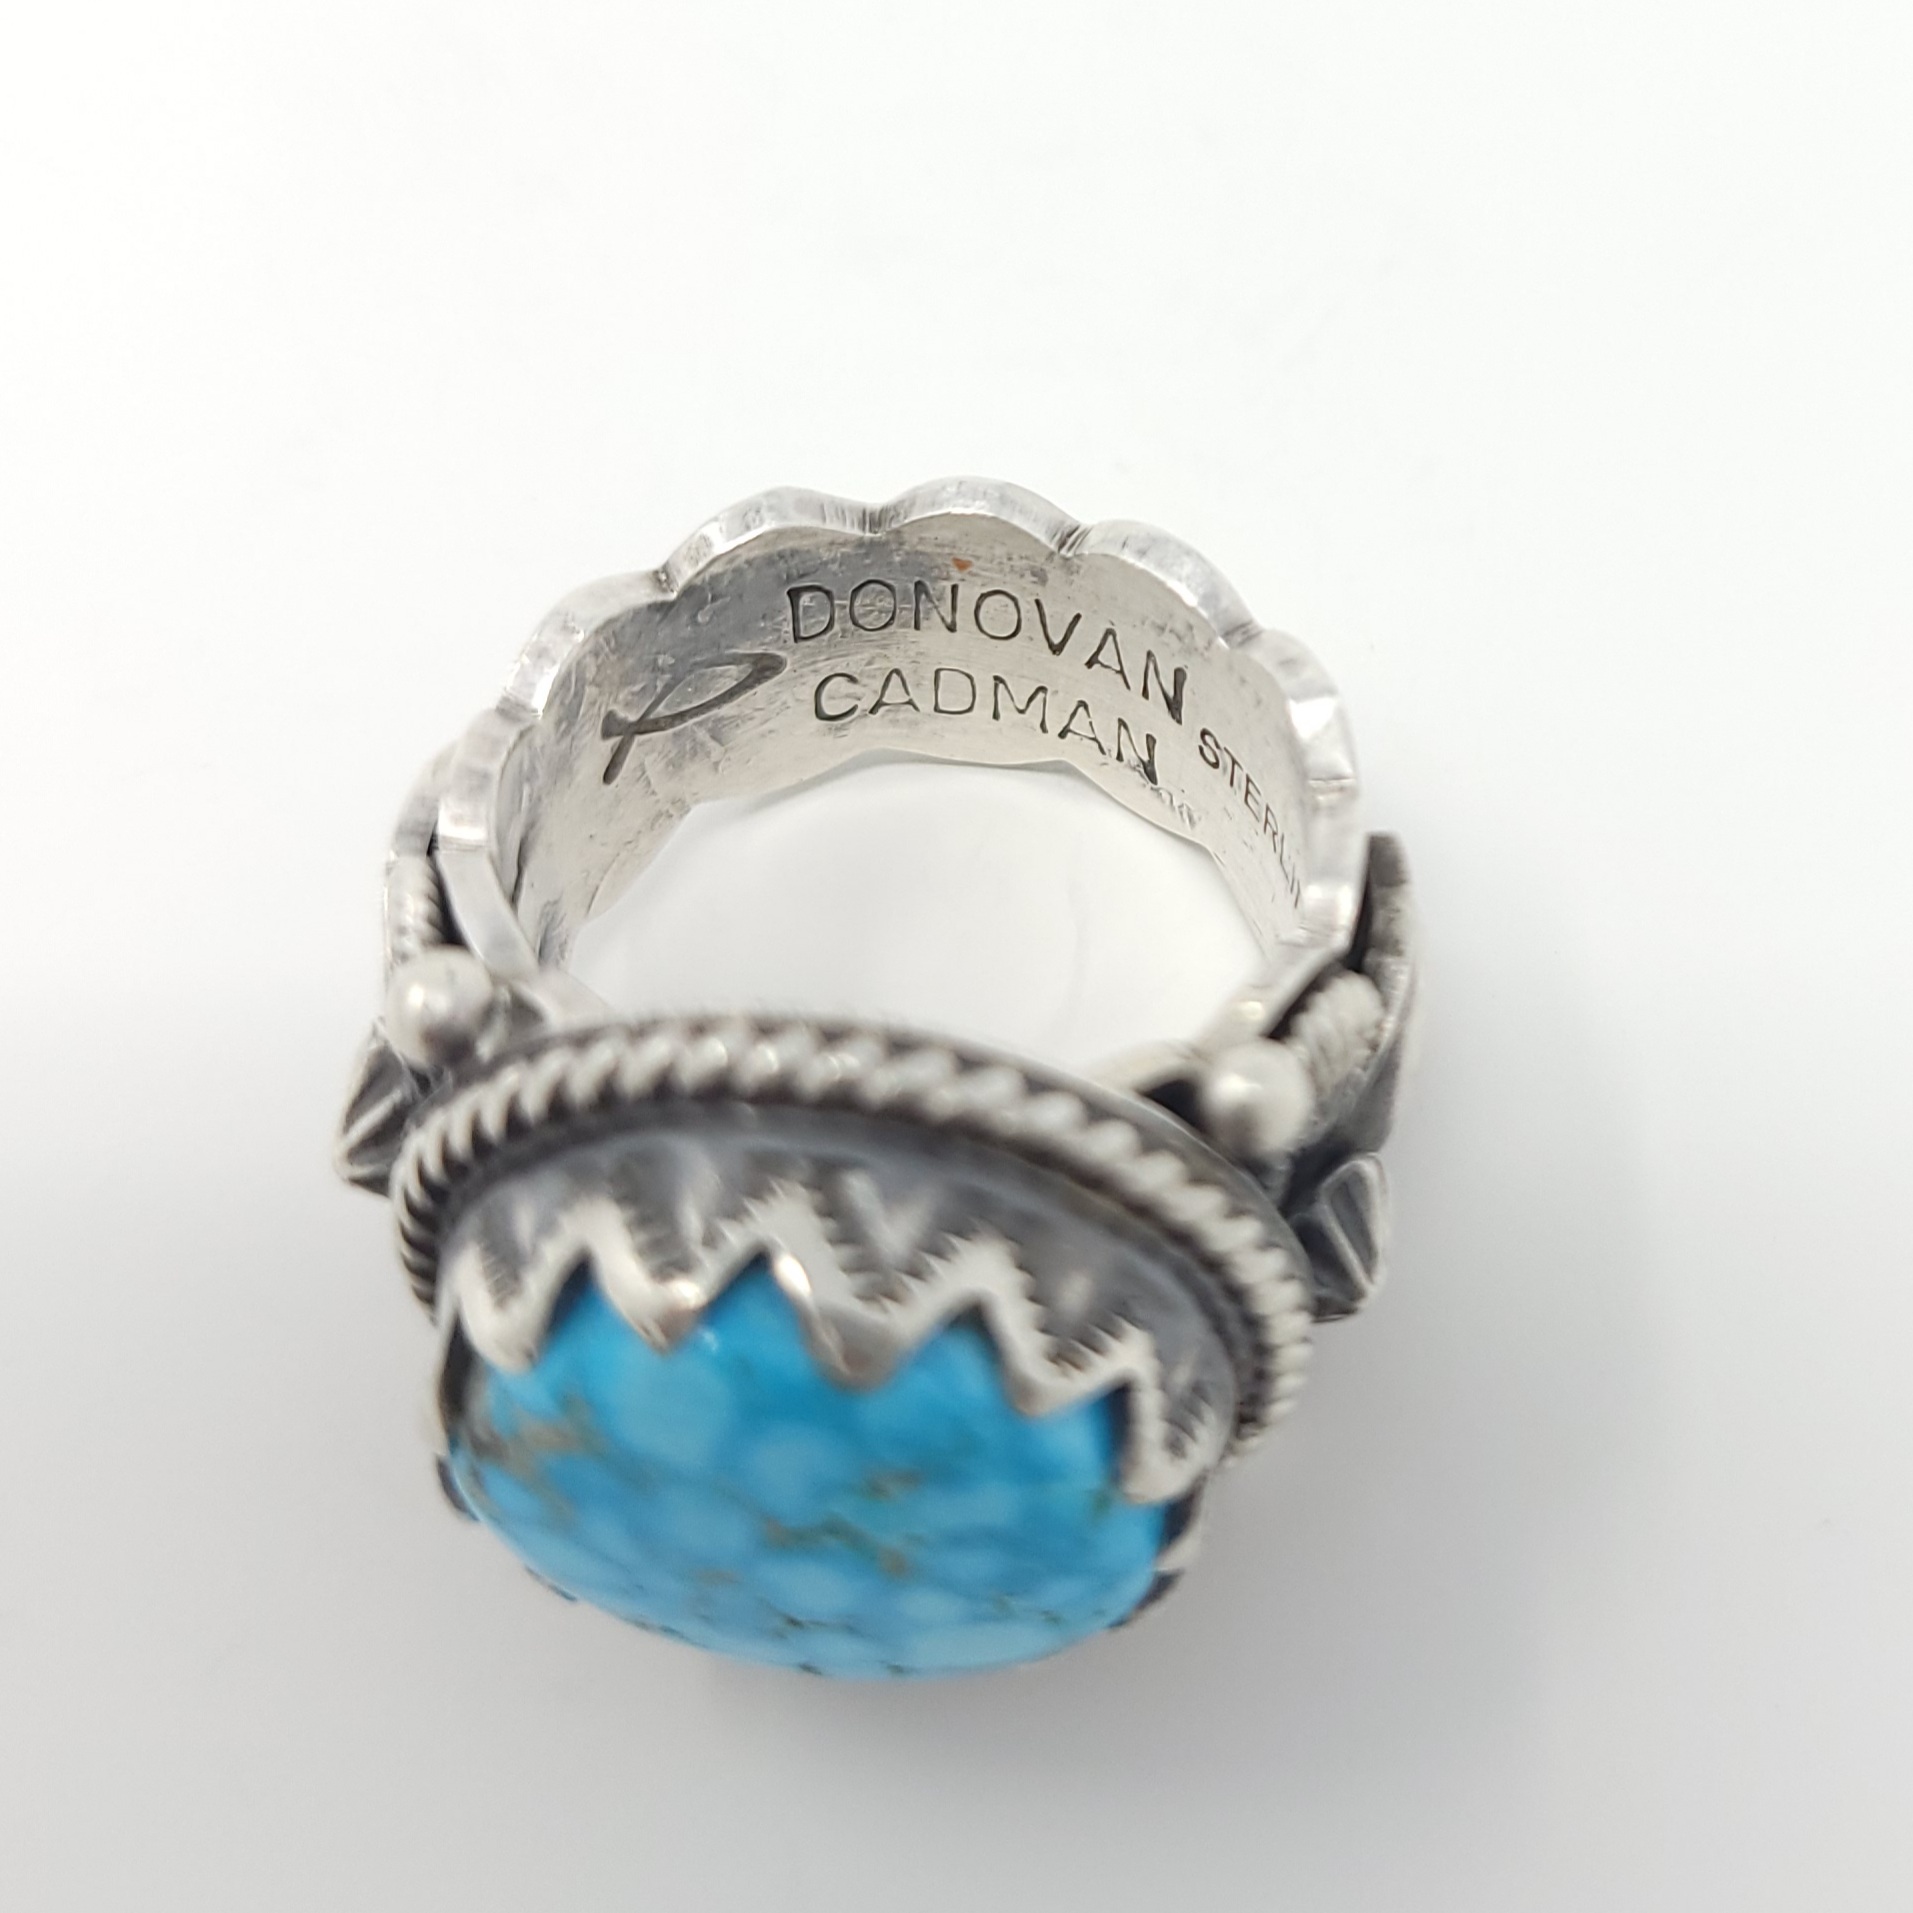 Donovan Cadman Navajo Sterling Silver Ring Rare Water Web Kingman Turquoise